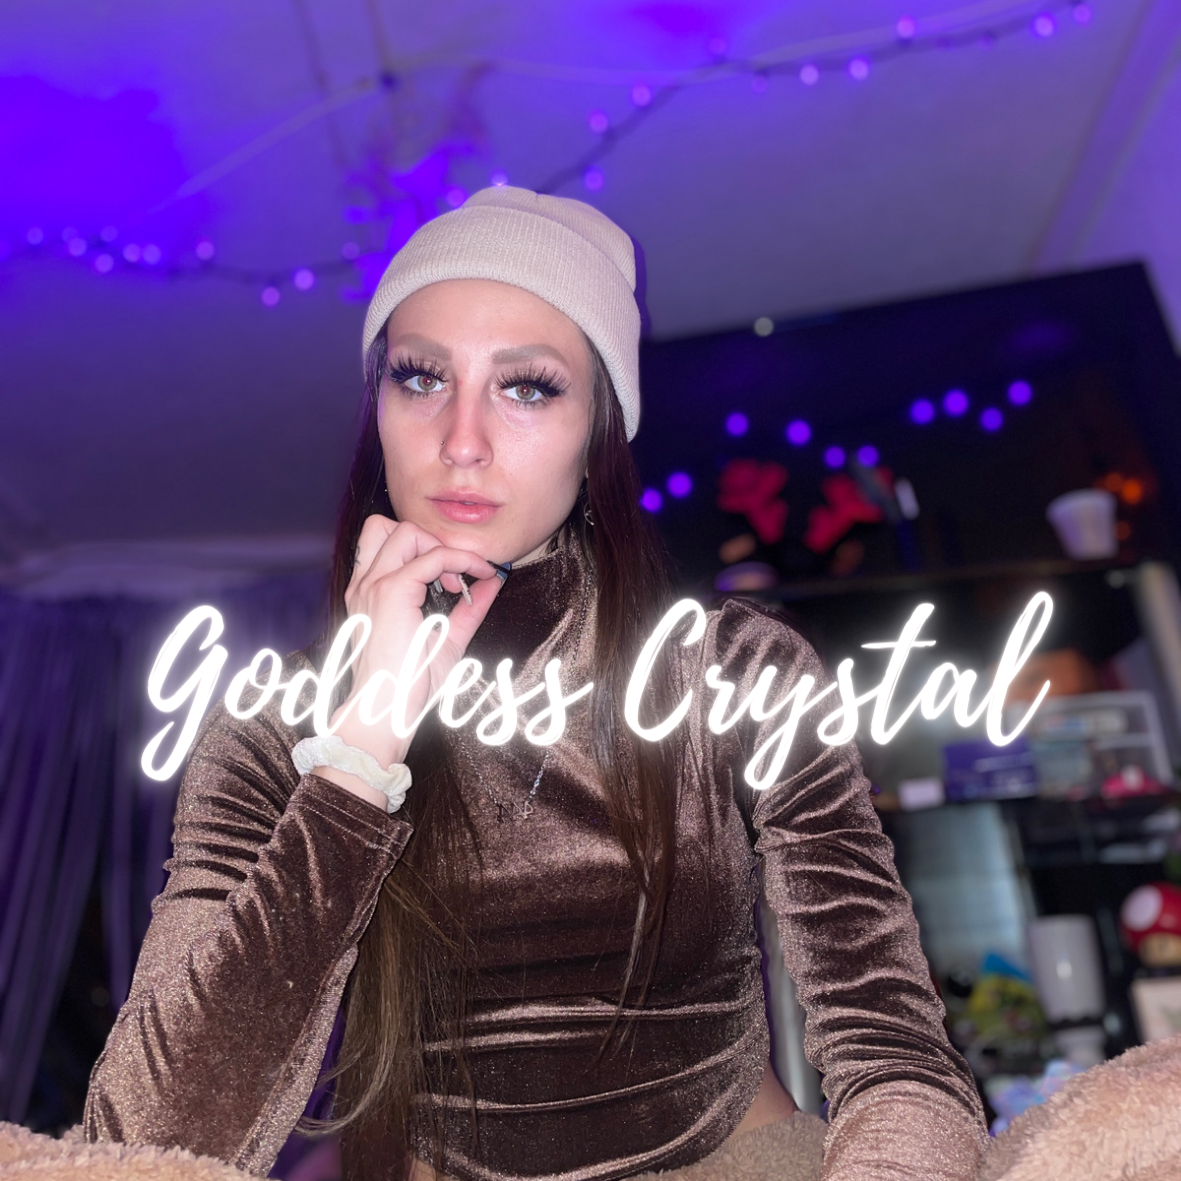 Goddess Crystal beta homewrecker